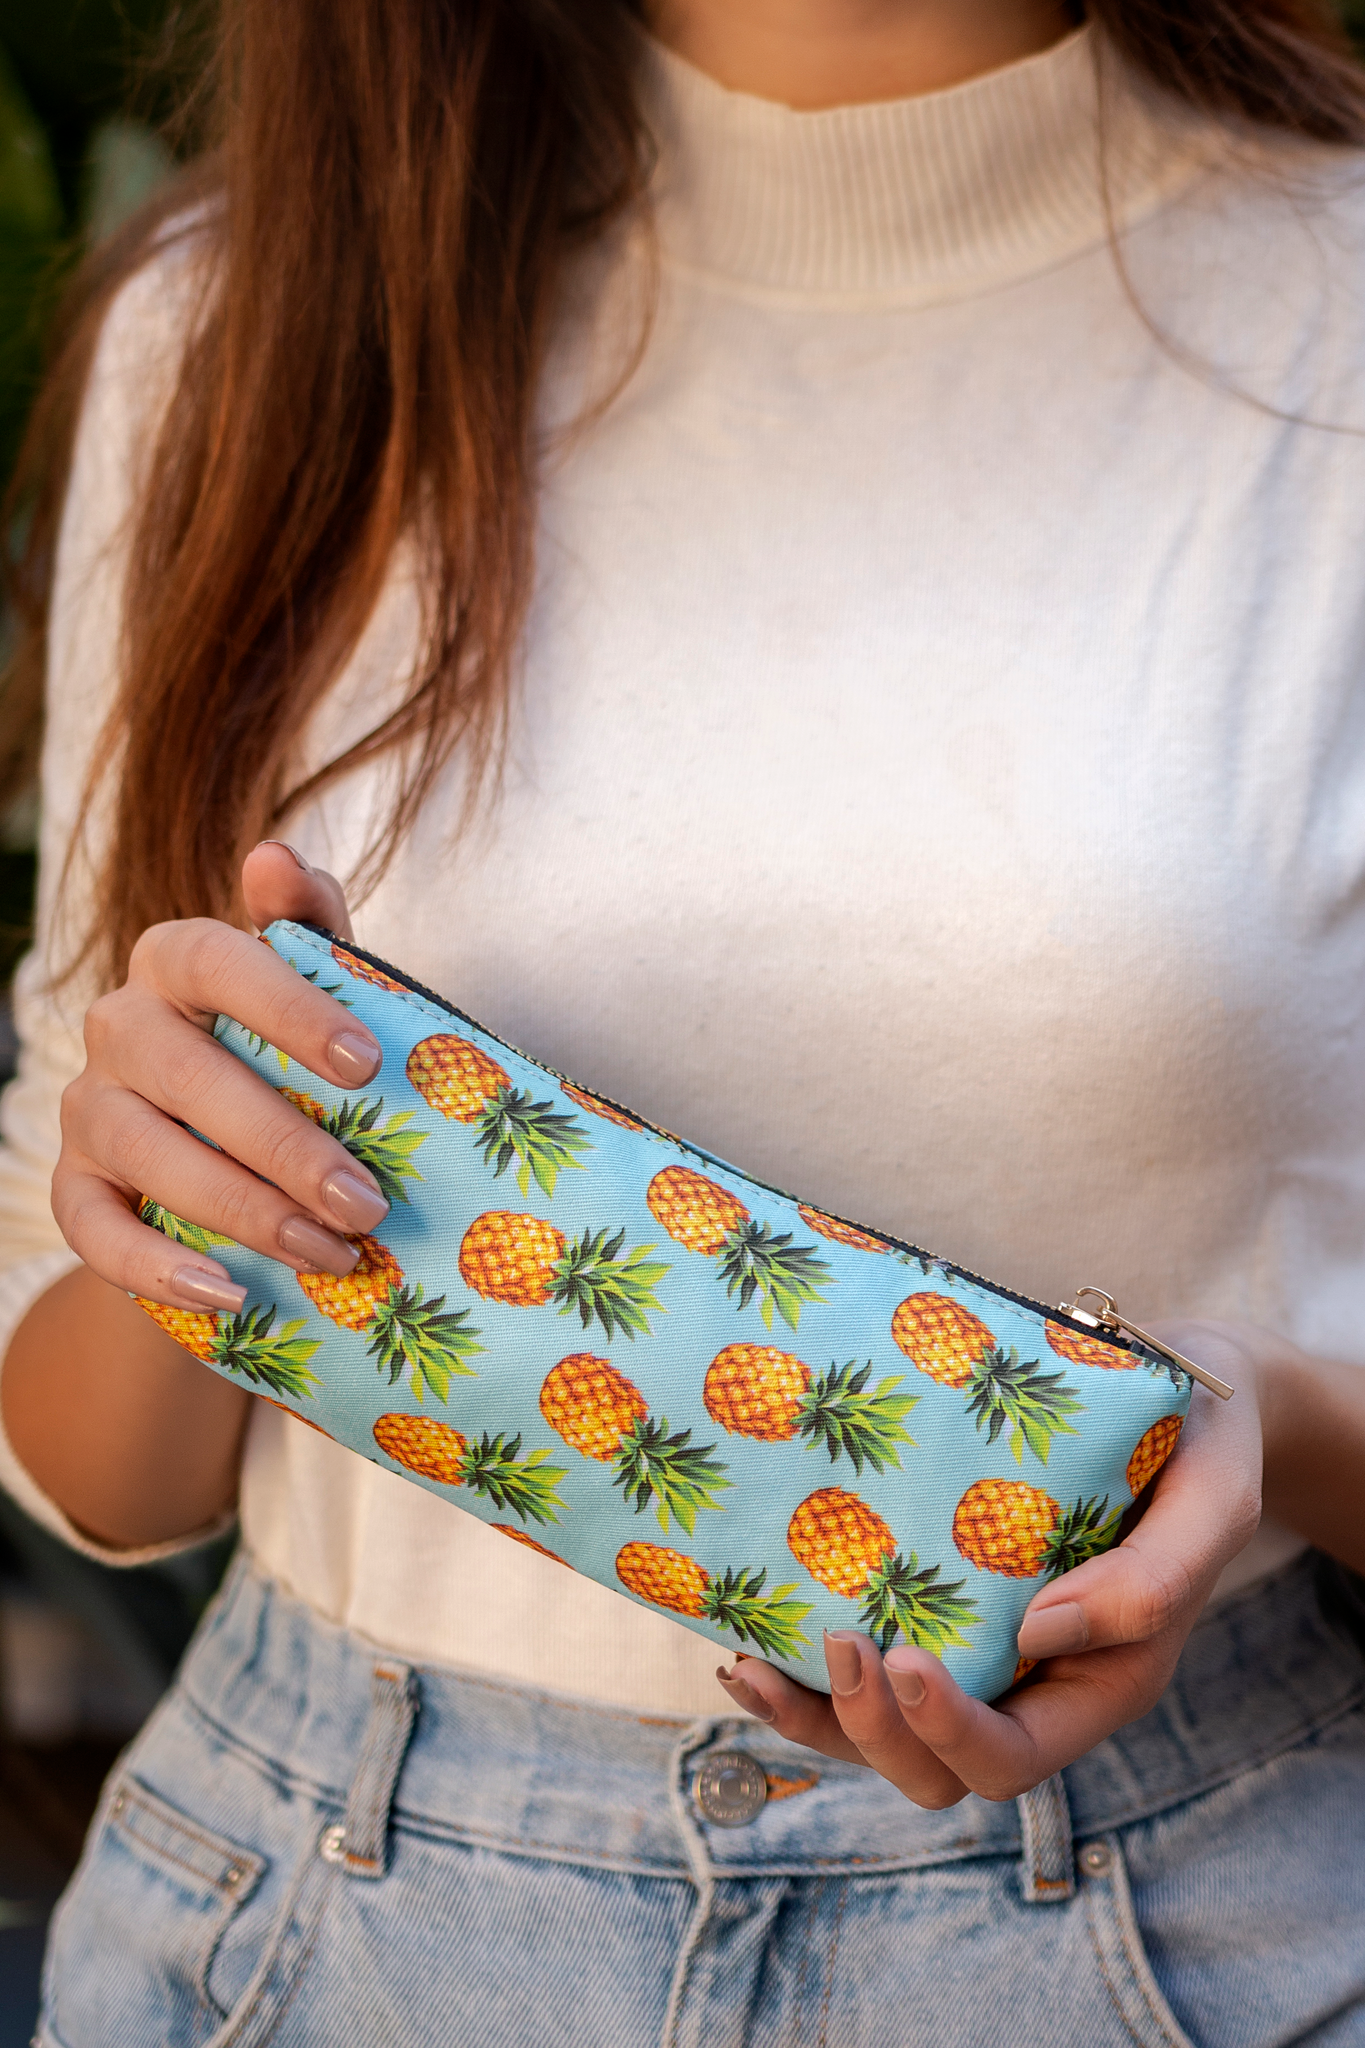 Womens Pineapple Bags